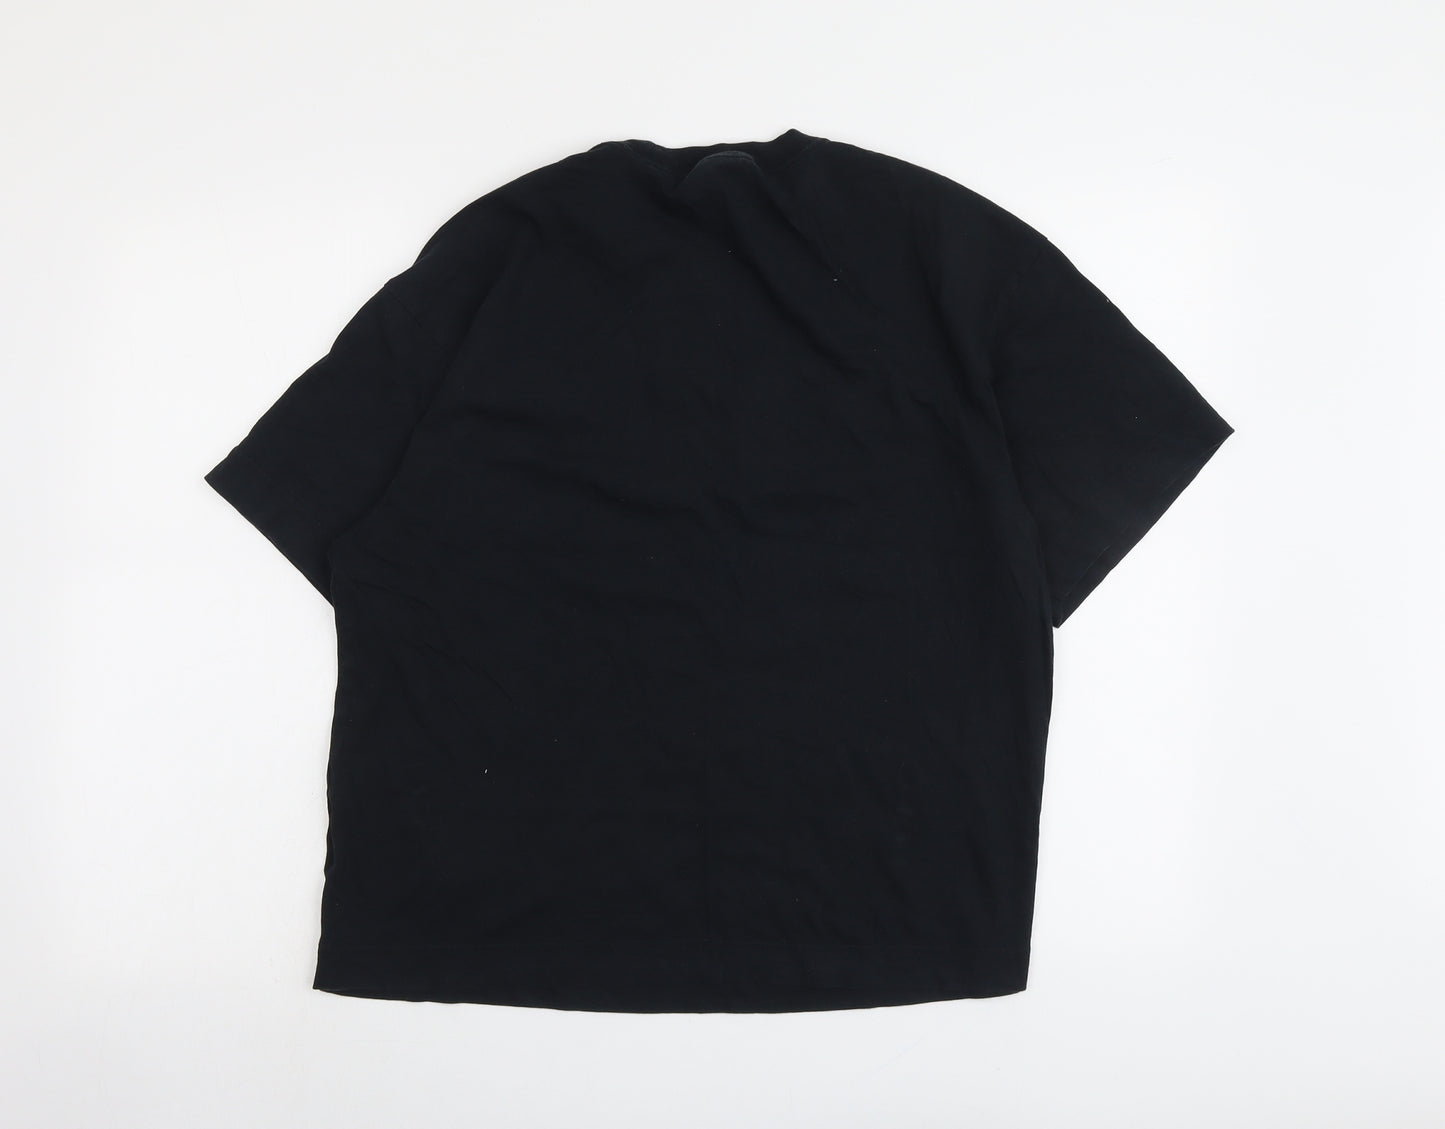 Nike Womens Black Cotton Basic T-Shirt Size M Round Neck